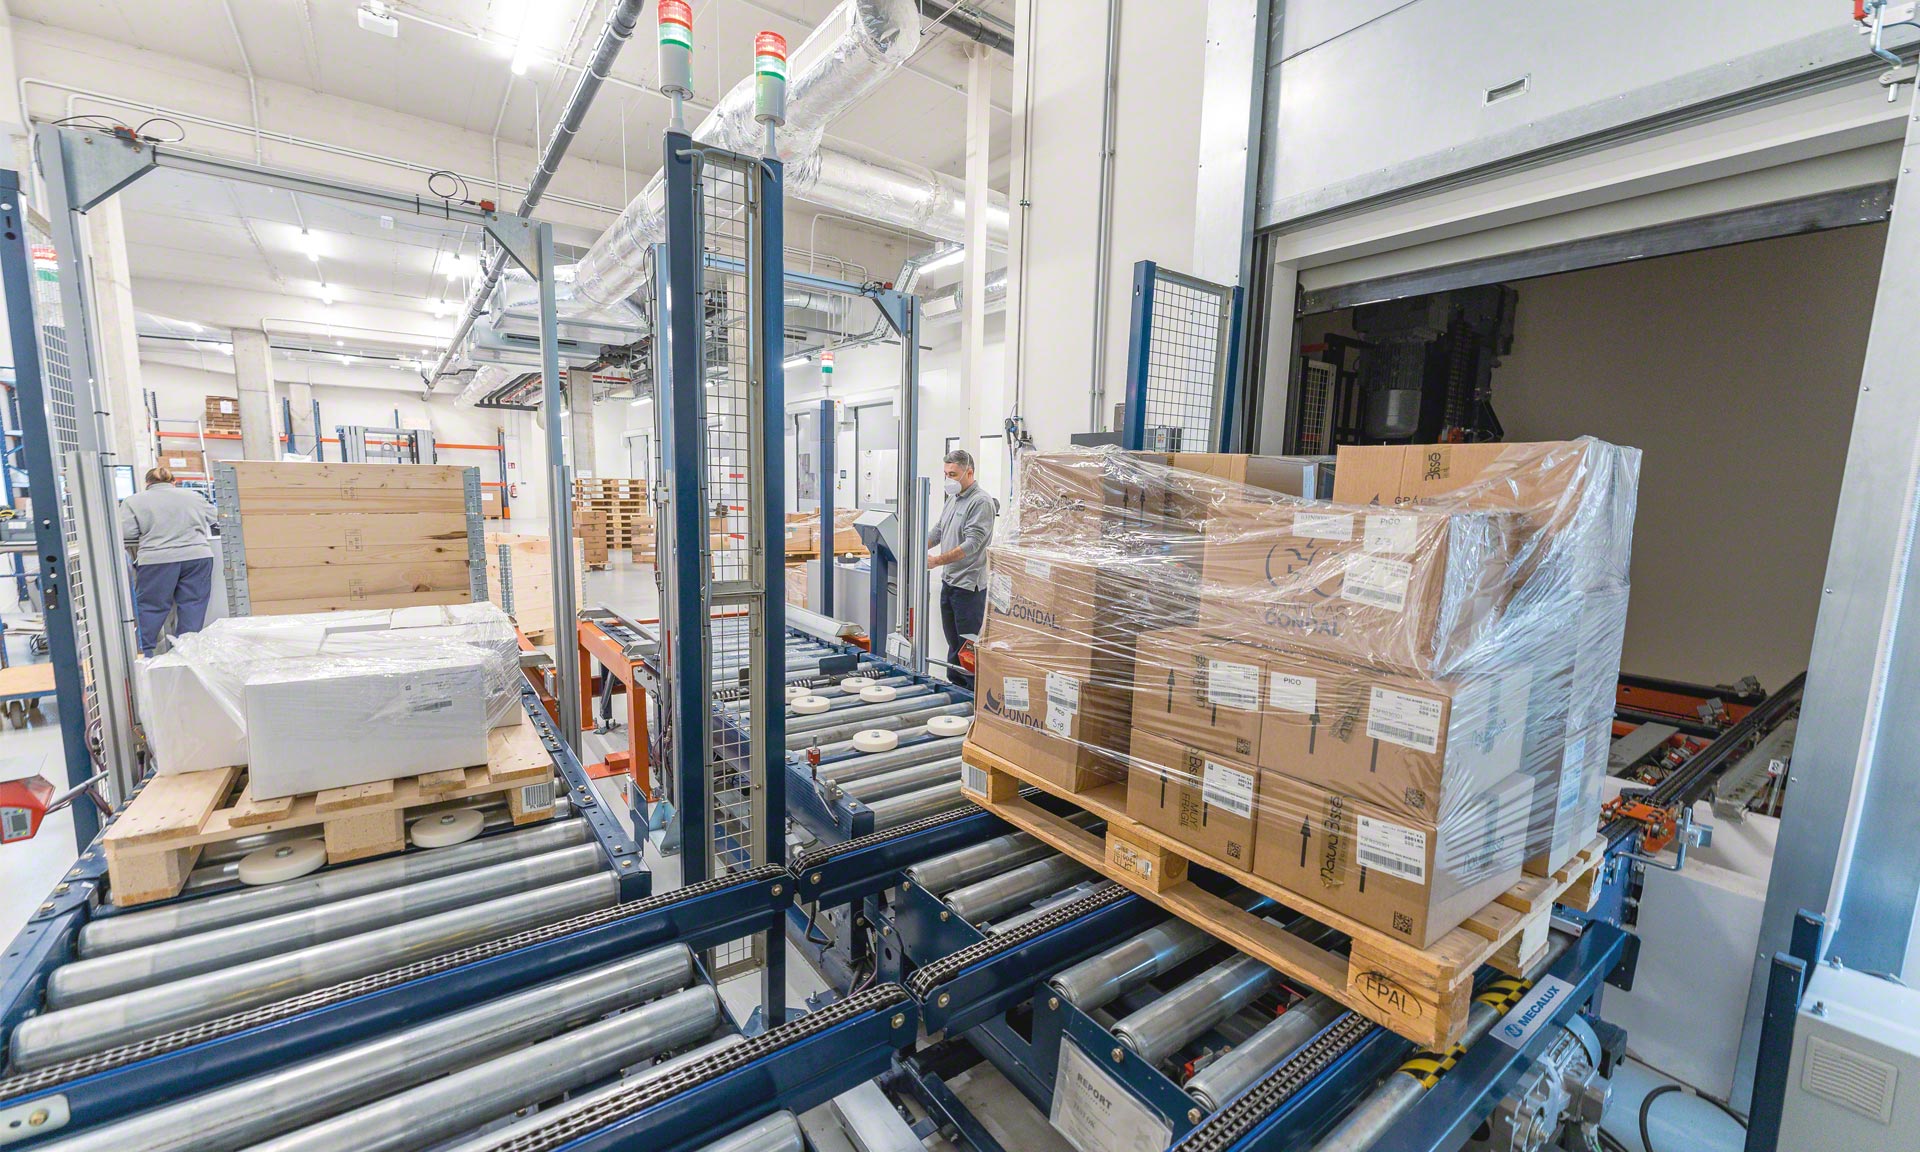 Natura Bissé: an automated warehouse for beautifying logistics